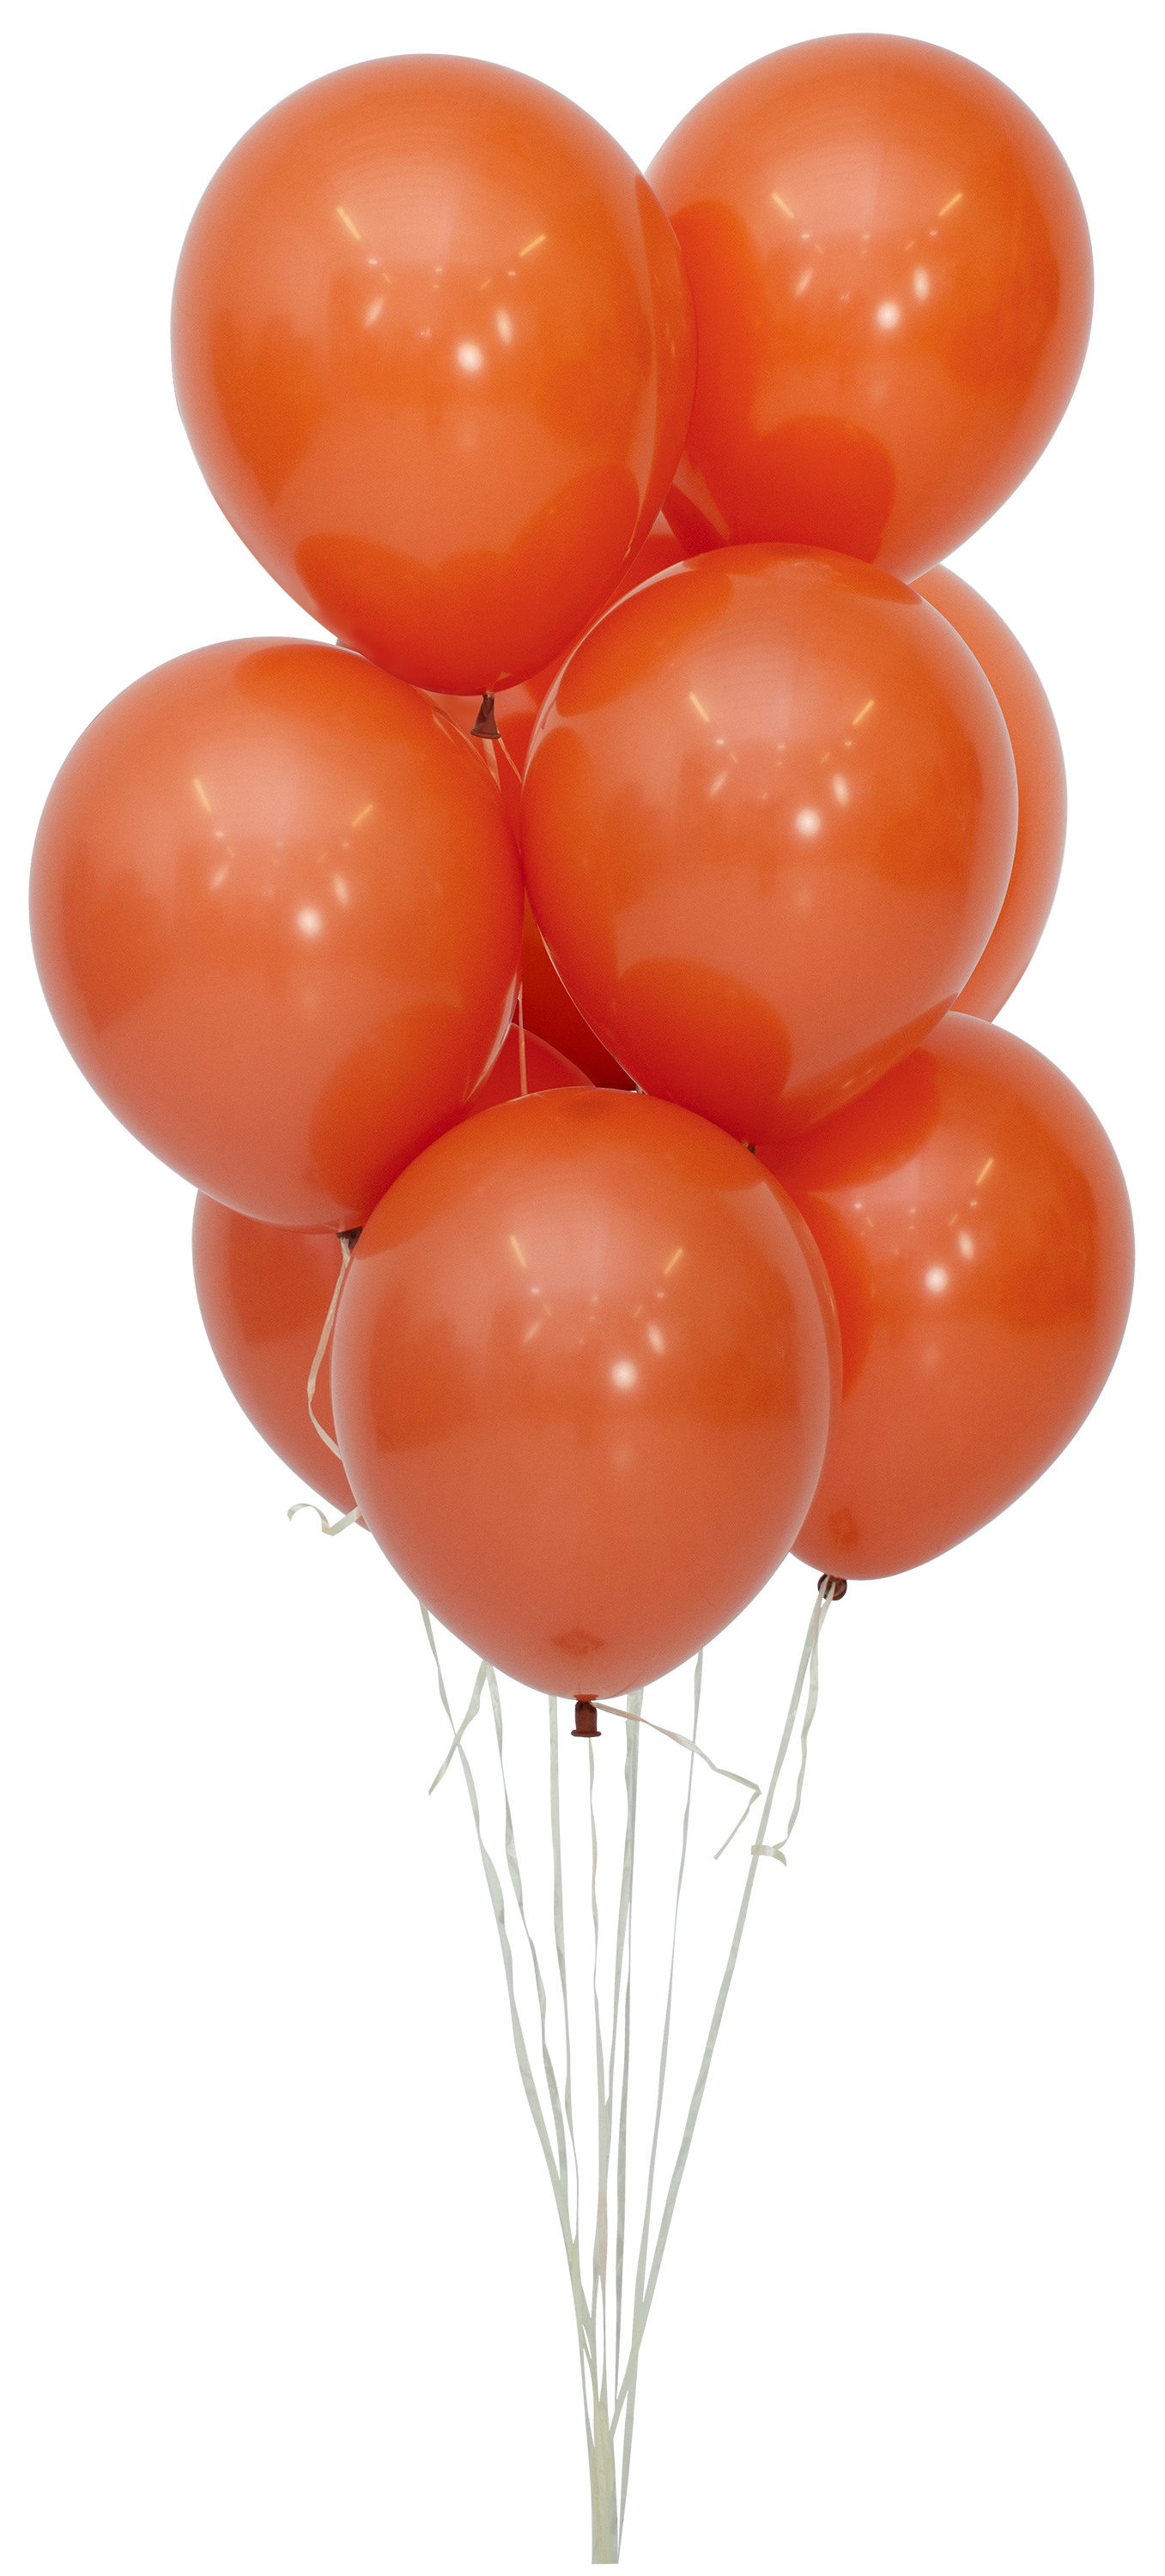 18" Sempertex Sunset Orange Latex Balloons | 25 Count